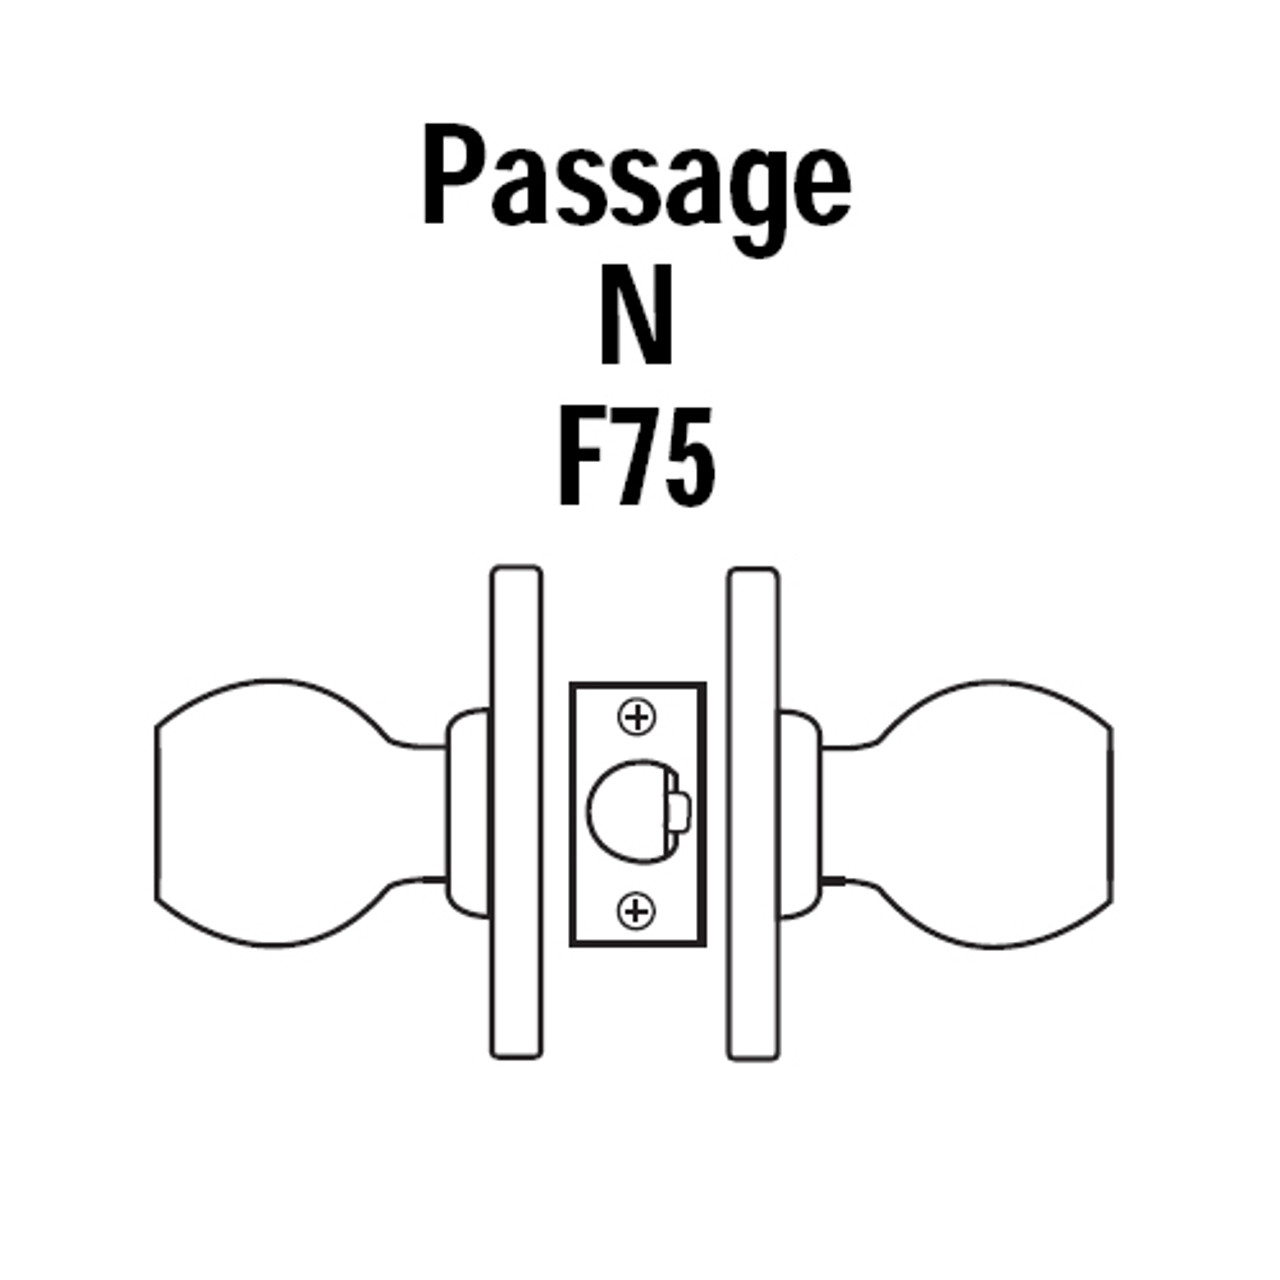 8K30N4DSTK605 Best 8K Series Passage Heavy Duty Cylindrical Knob Locks with Round Style in Bright Brass